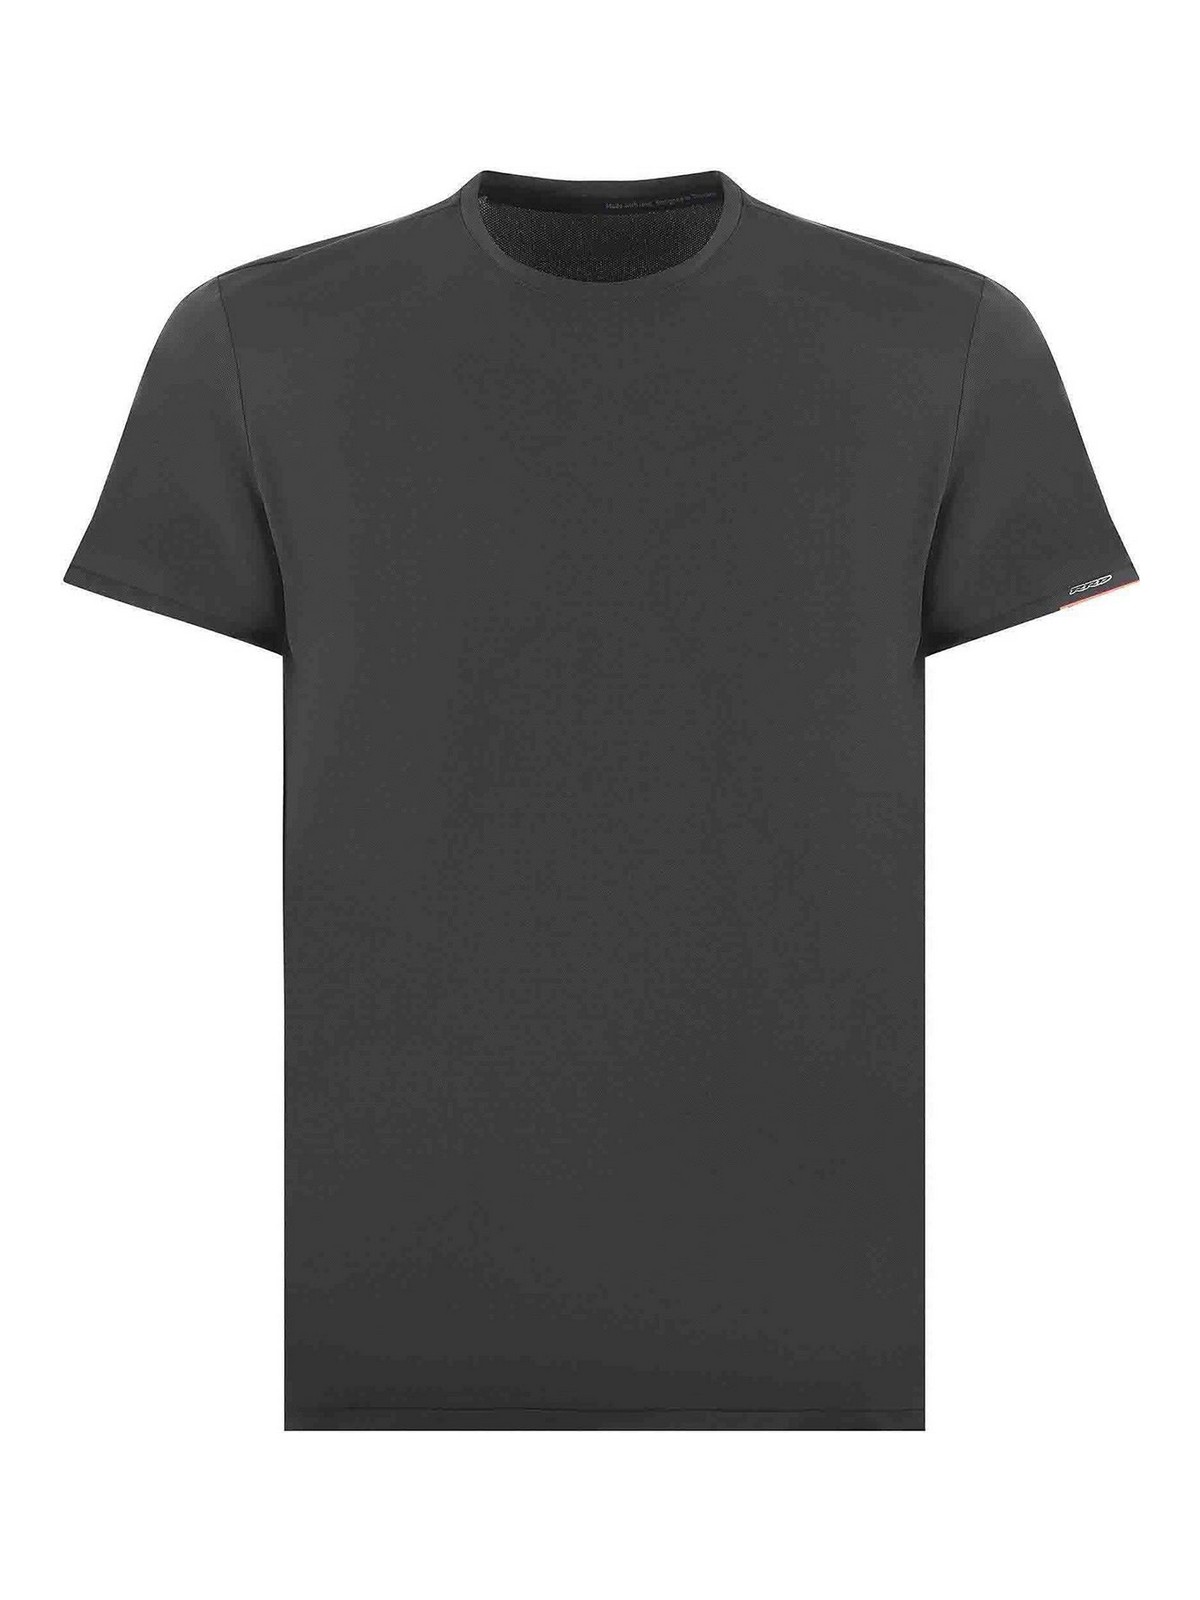 Rrd Roberto Ricci Designs T-shirt In Black